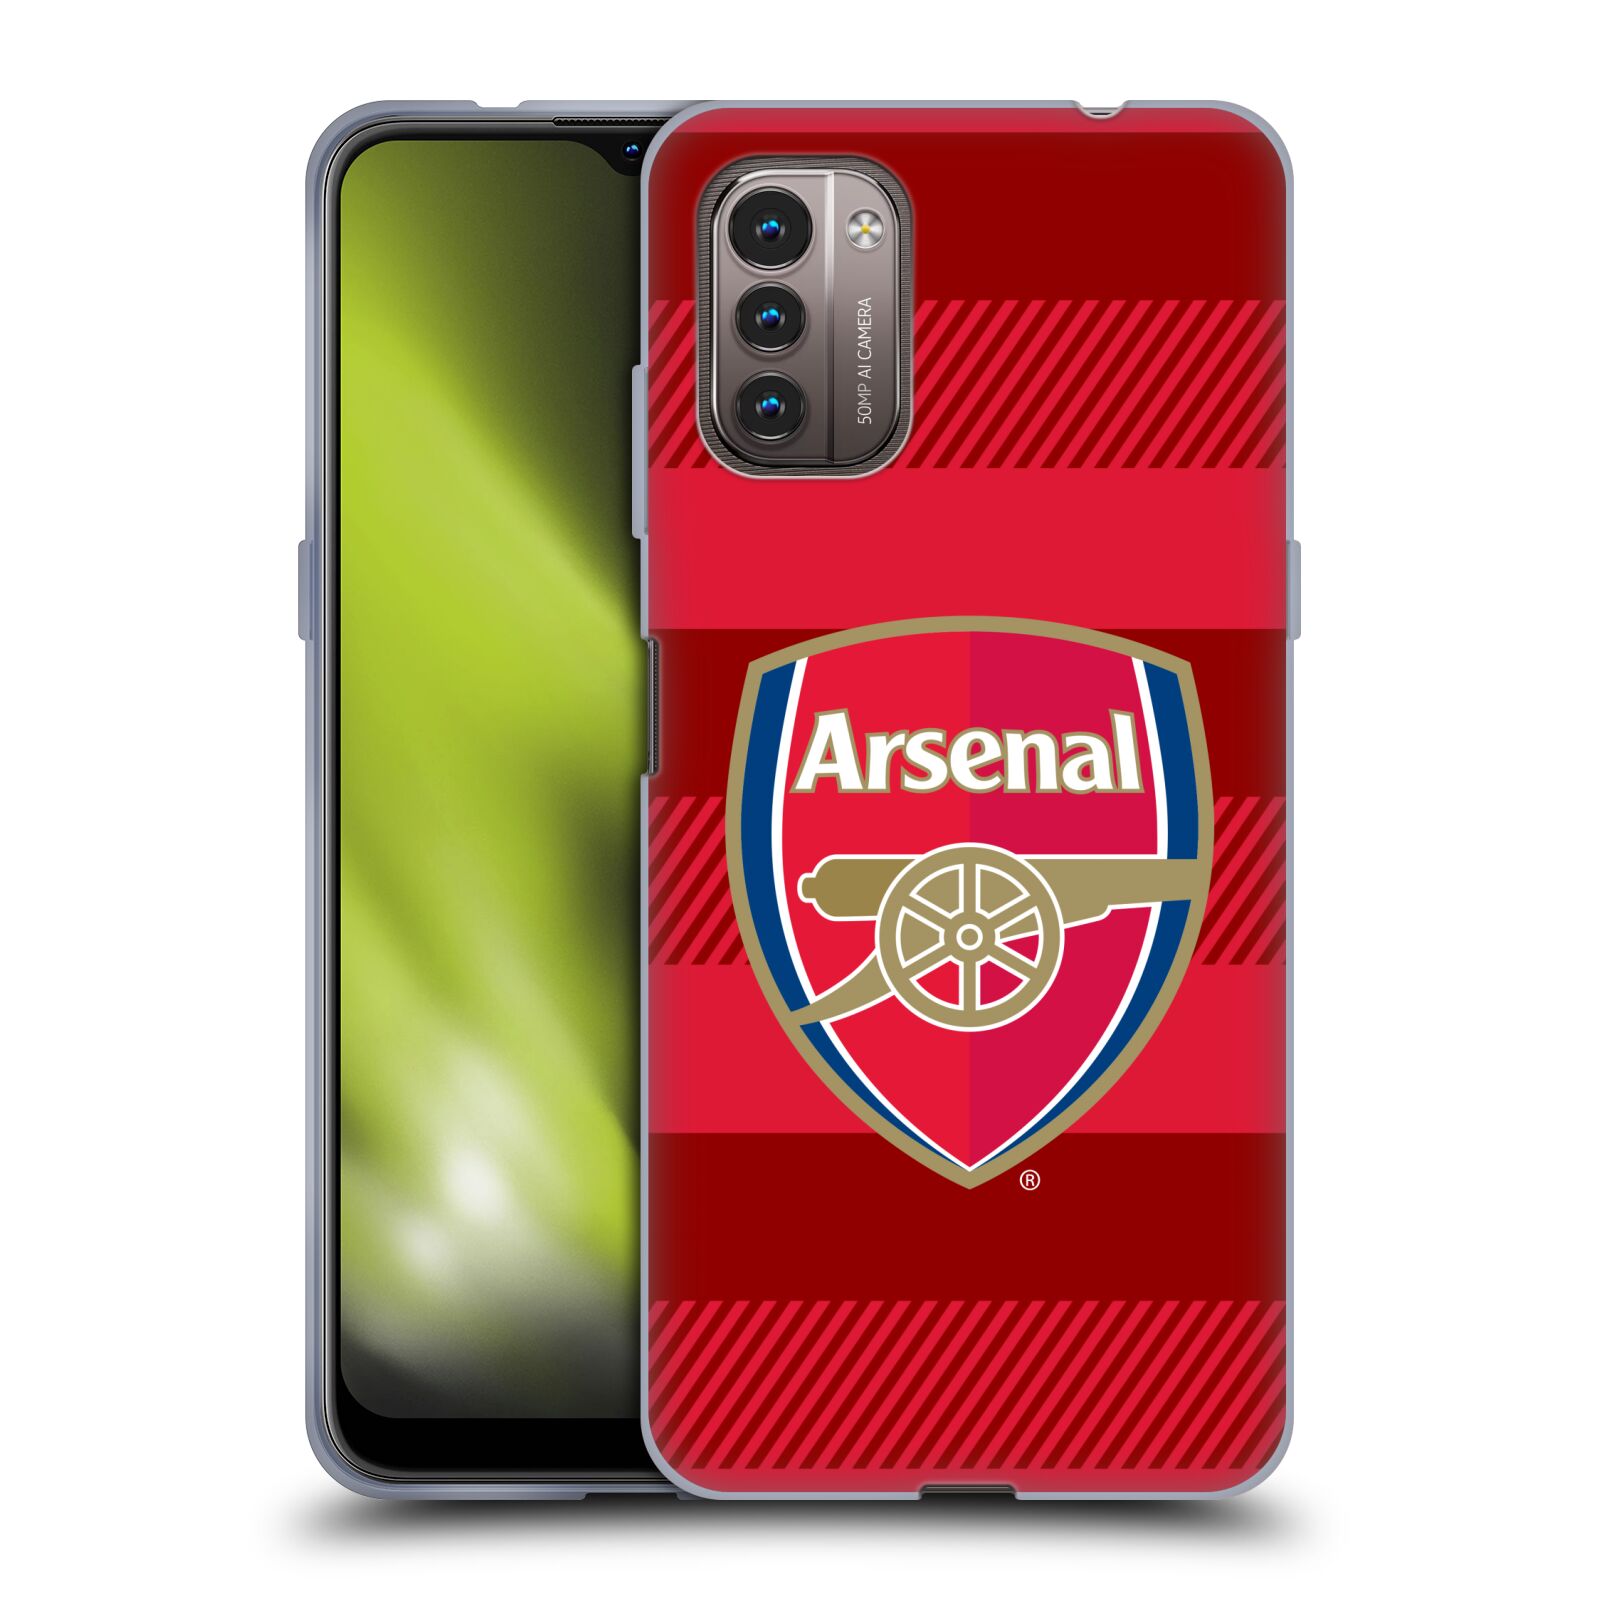 Silikonové pouzdro na mobil Nokia G11 / G21 - Head Case - Arsenal FC - Logo s pruhy